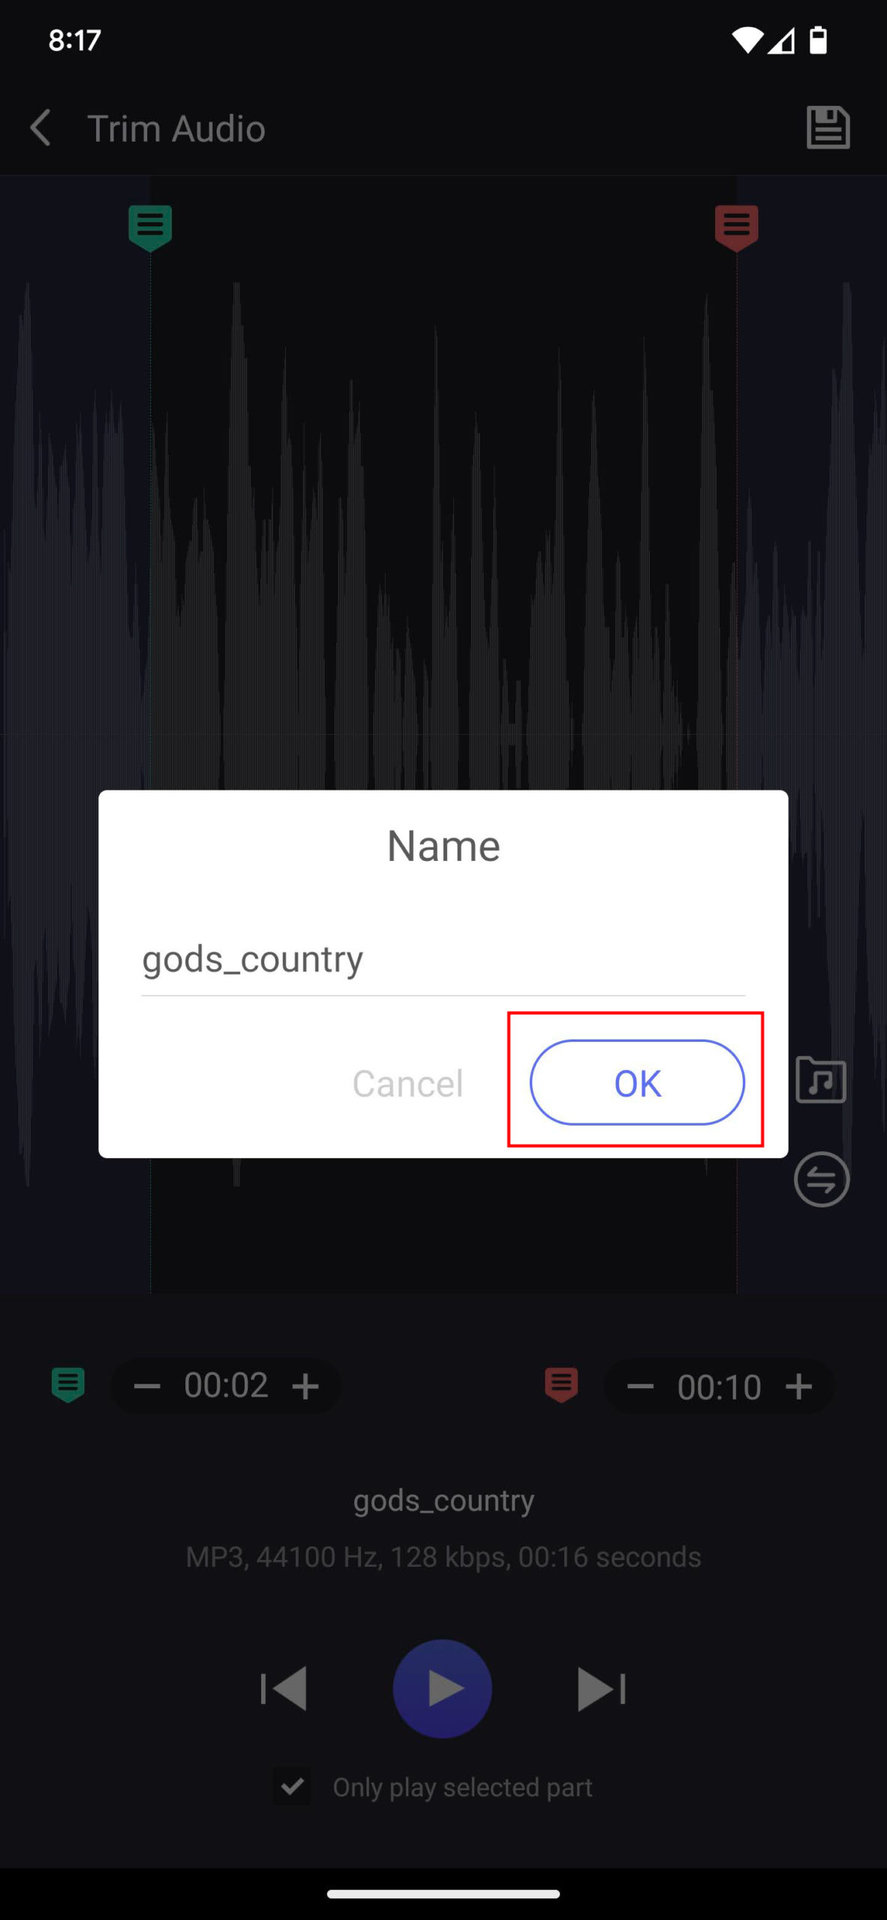 How to trim audio using Music Editor app 4